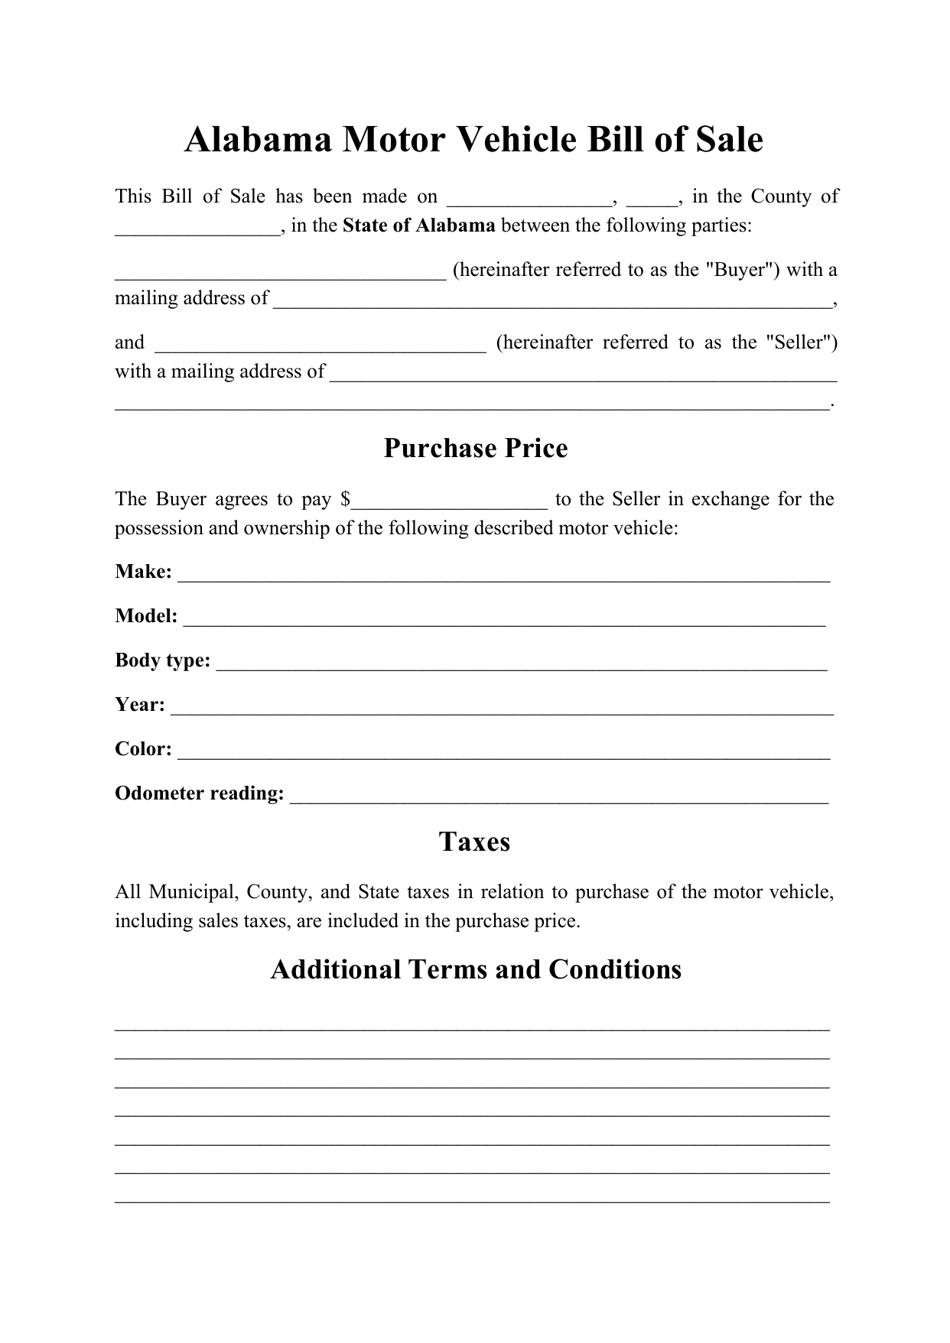 Alabama Motor Vehicle Bill of Sale Form Download Printable PDF